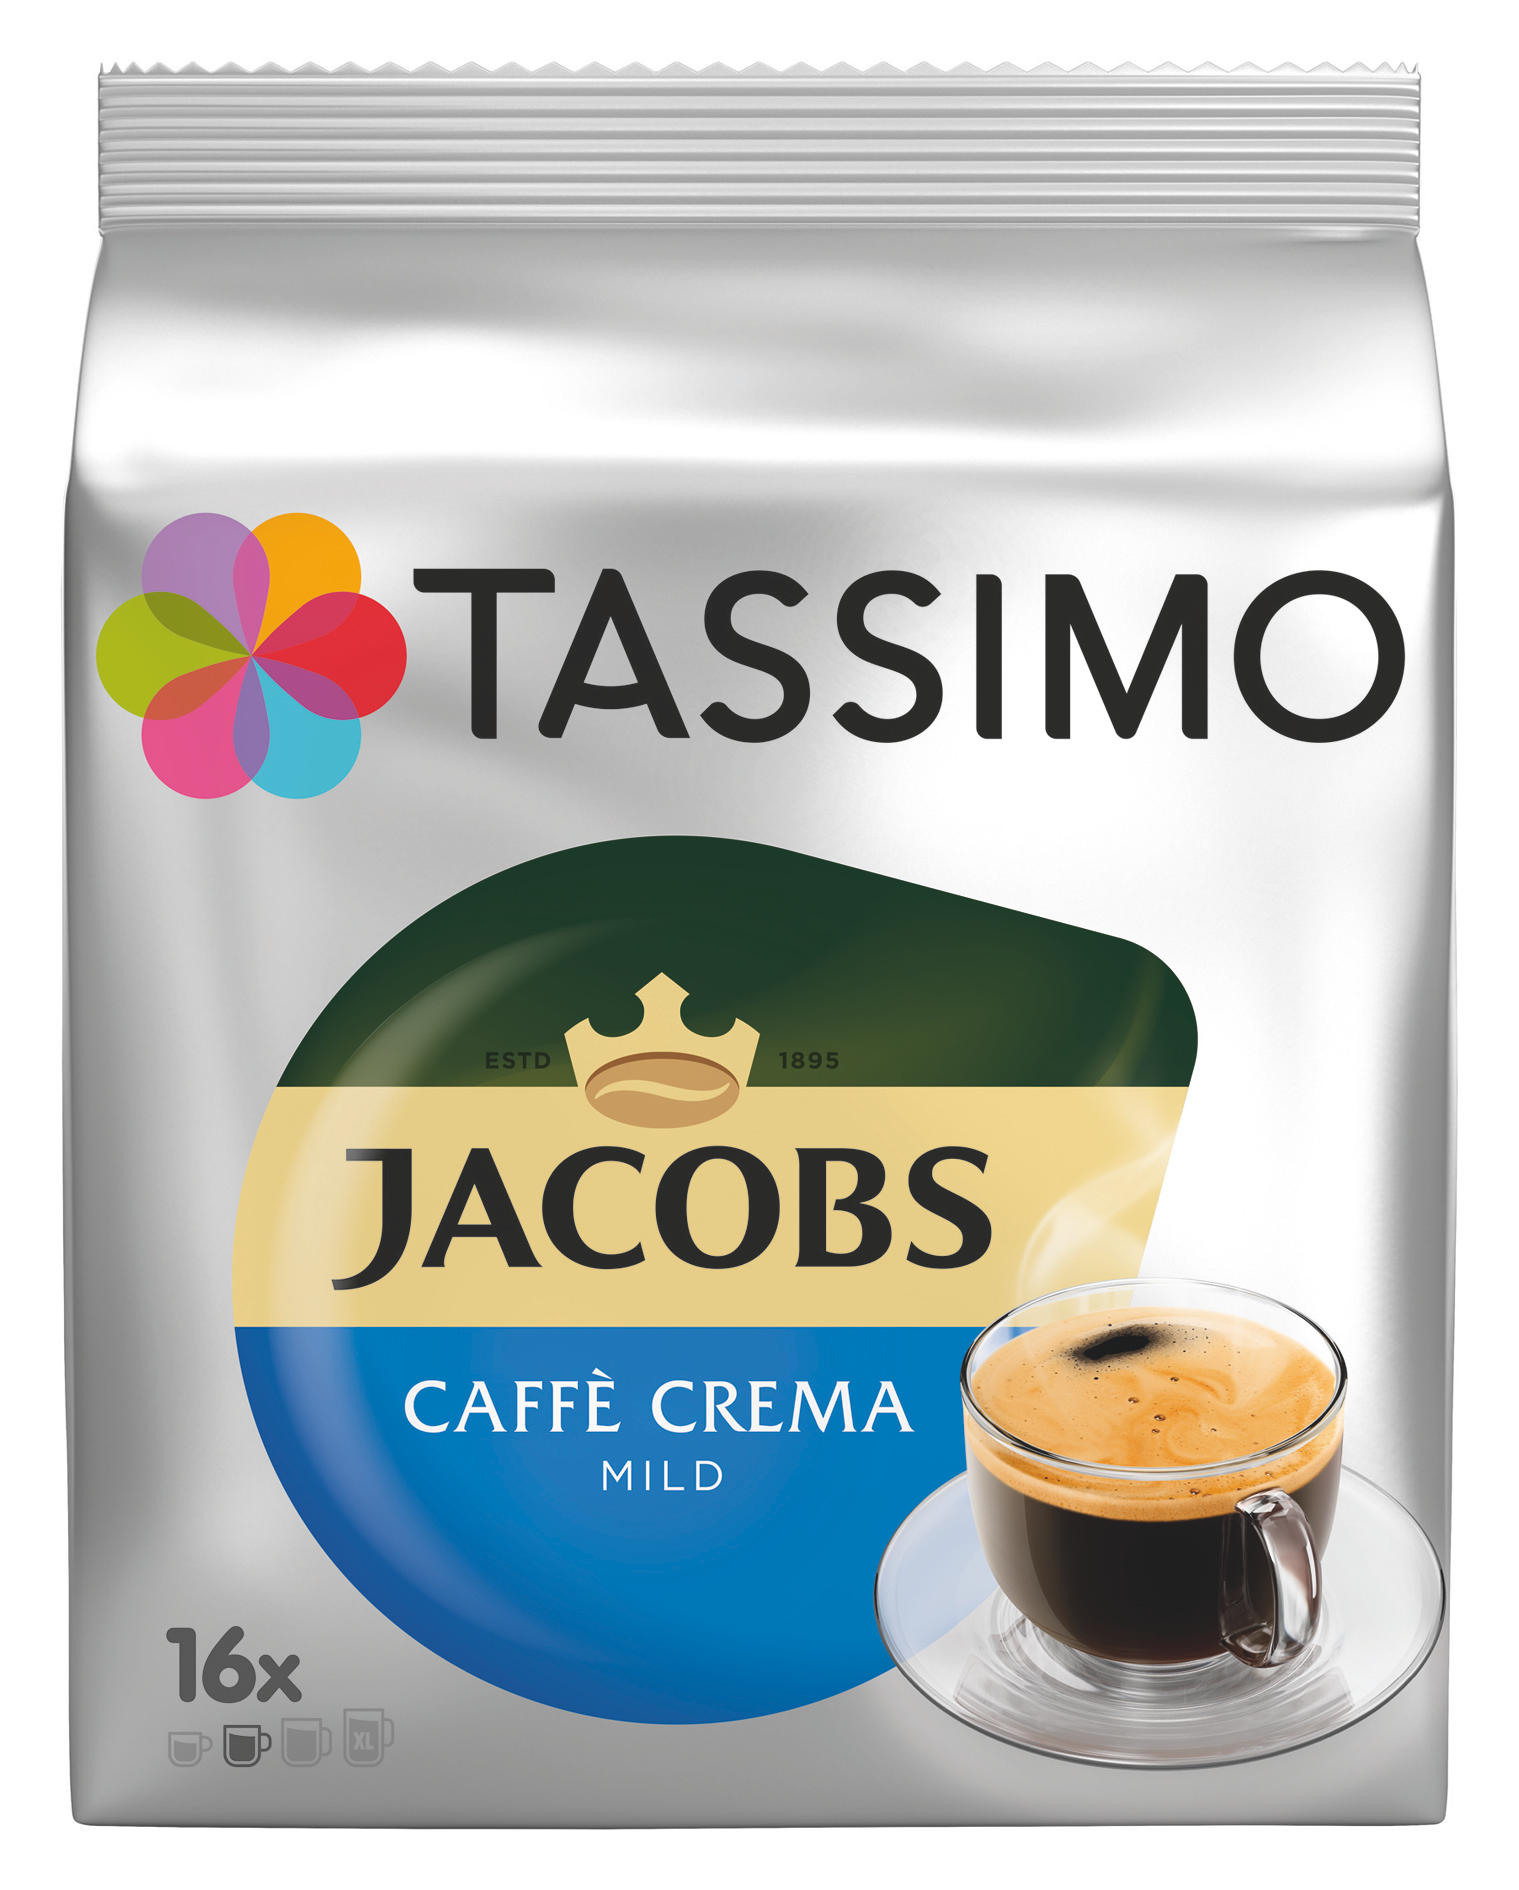 TASSIMO 4031532 Jacobs Caffe Crema Mild Kaffeekapseln (Tassimo)